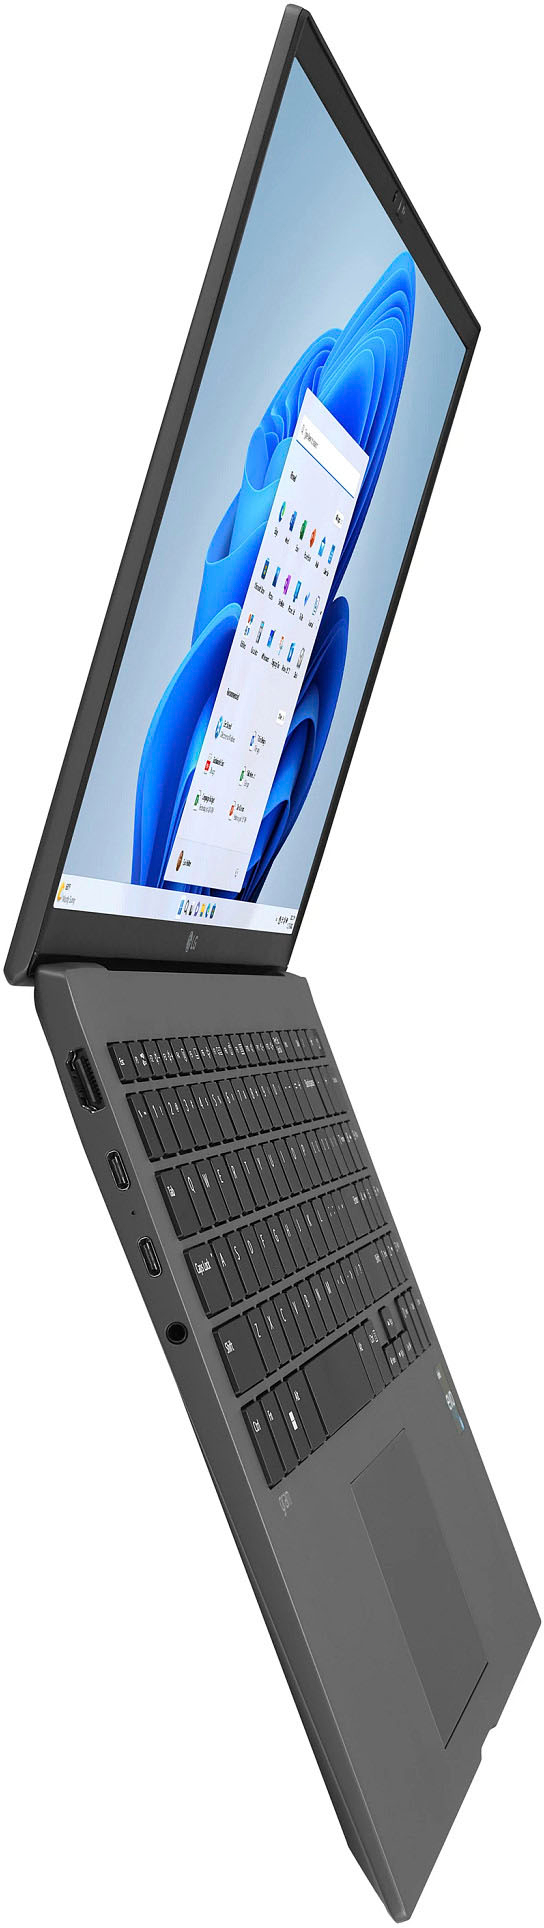 LG Gram SuperSlim Review: A Portable but Weak 15-Inch Laptop